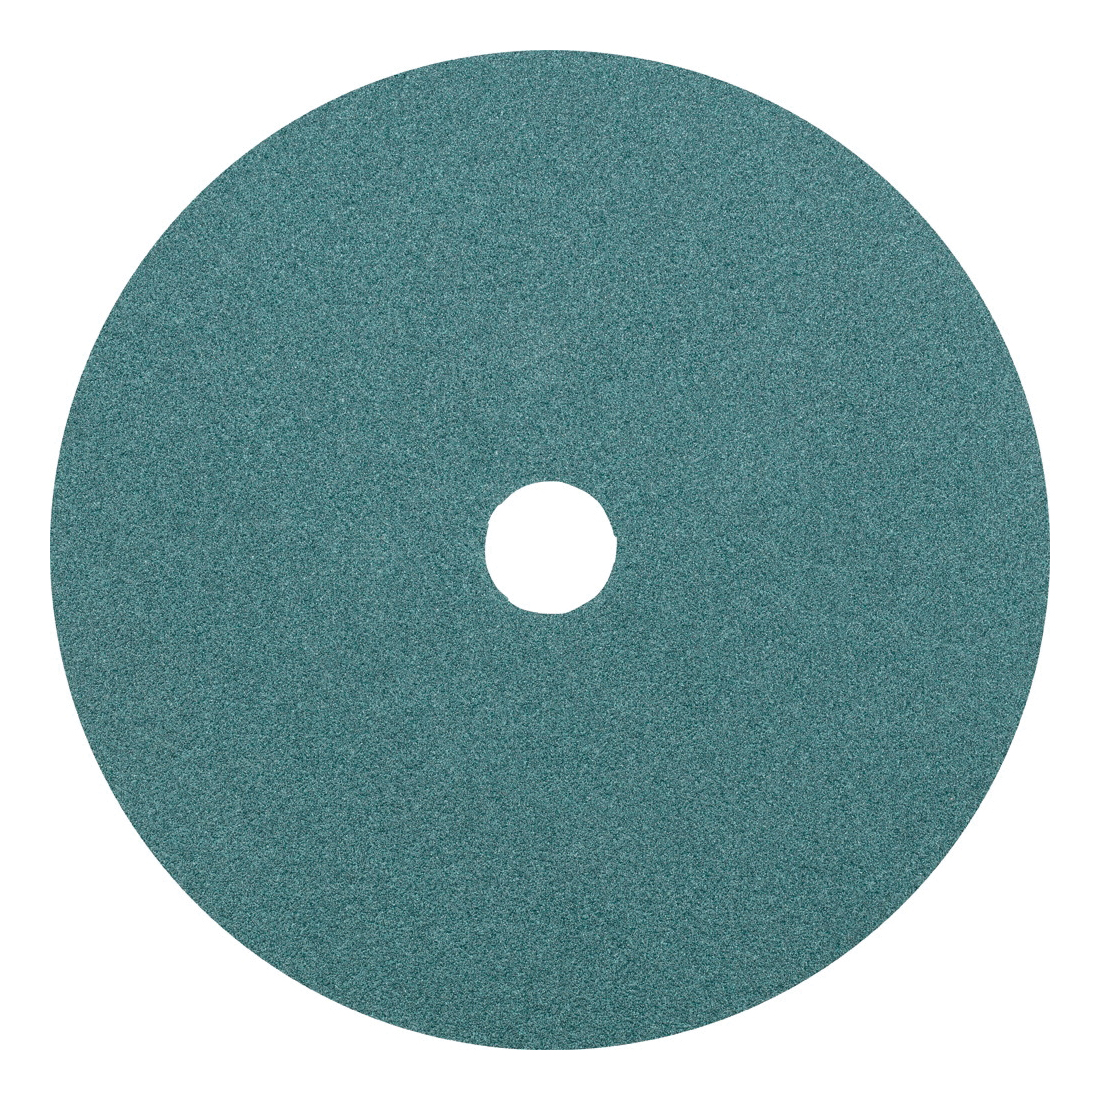 PFERD 62716 Standard Coated Abrasive Disc, 7 in Dia, 7/8 in Center Hole, 80 Grit, Zirconia Alumina Abrasive, Arbor Attachment